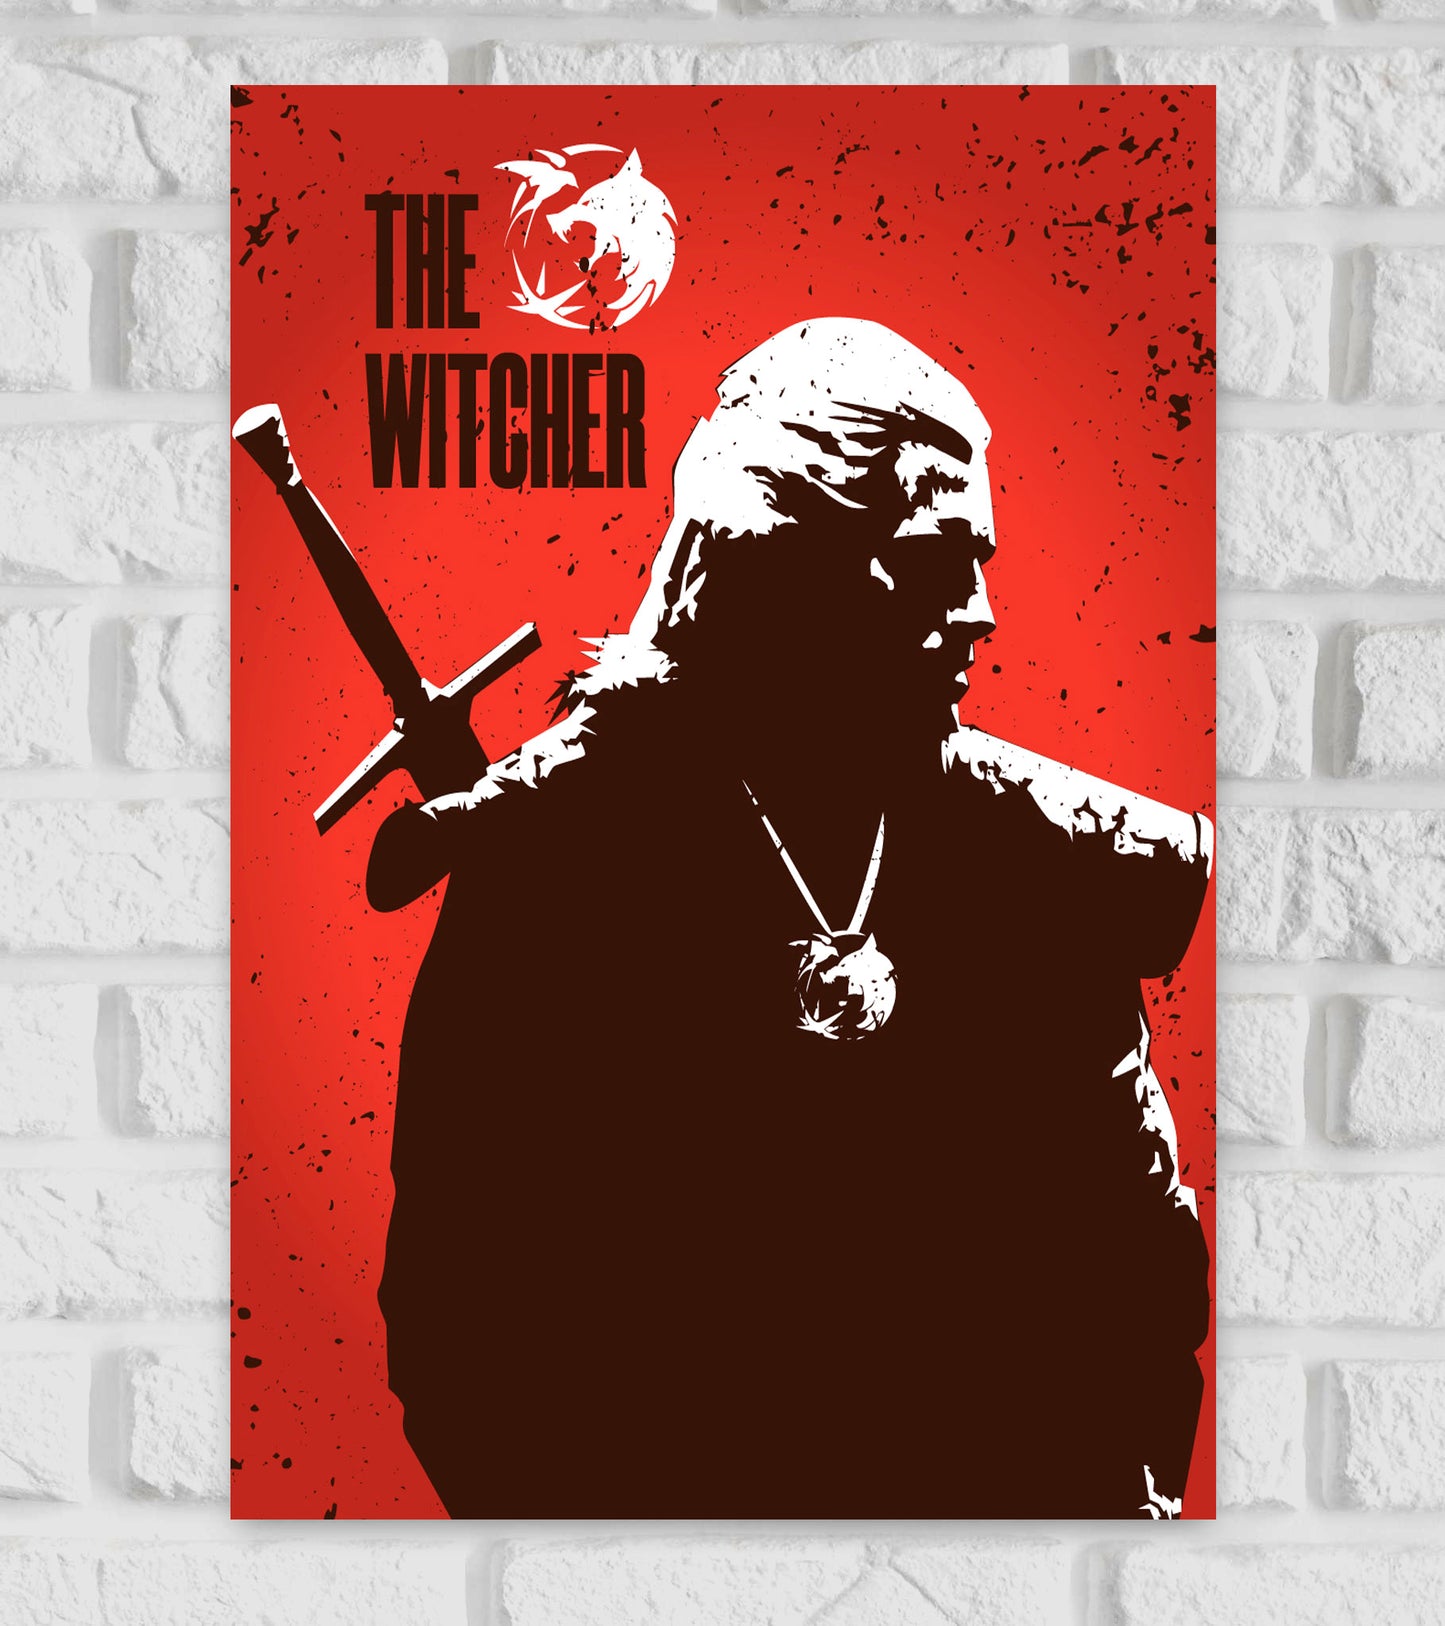 The Witcher Series Art work